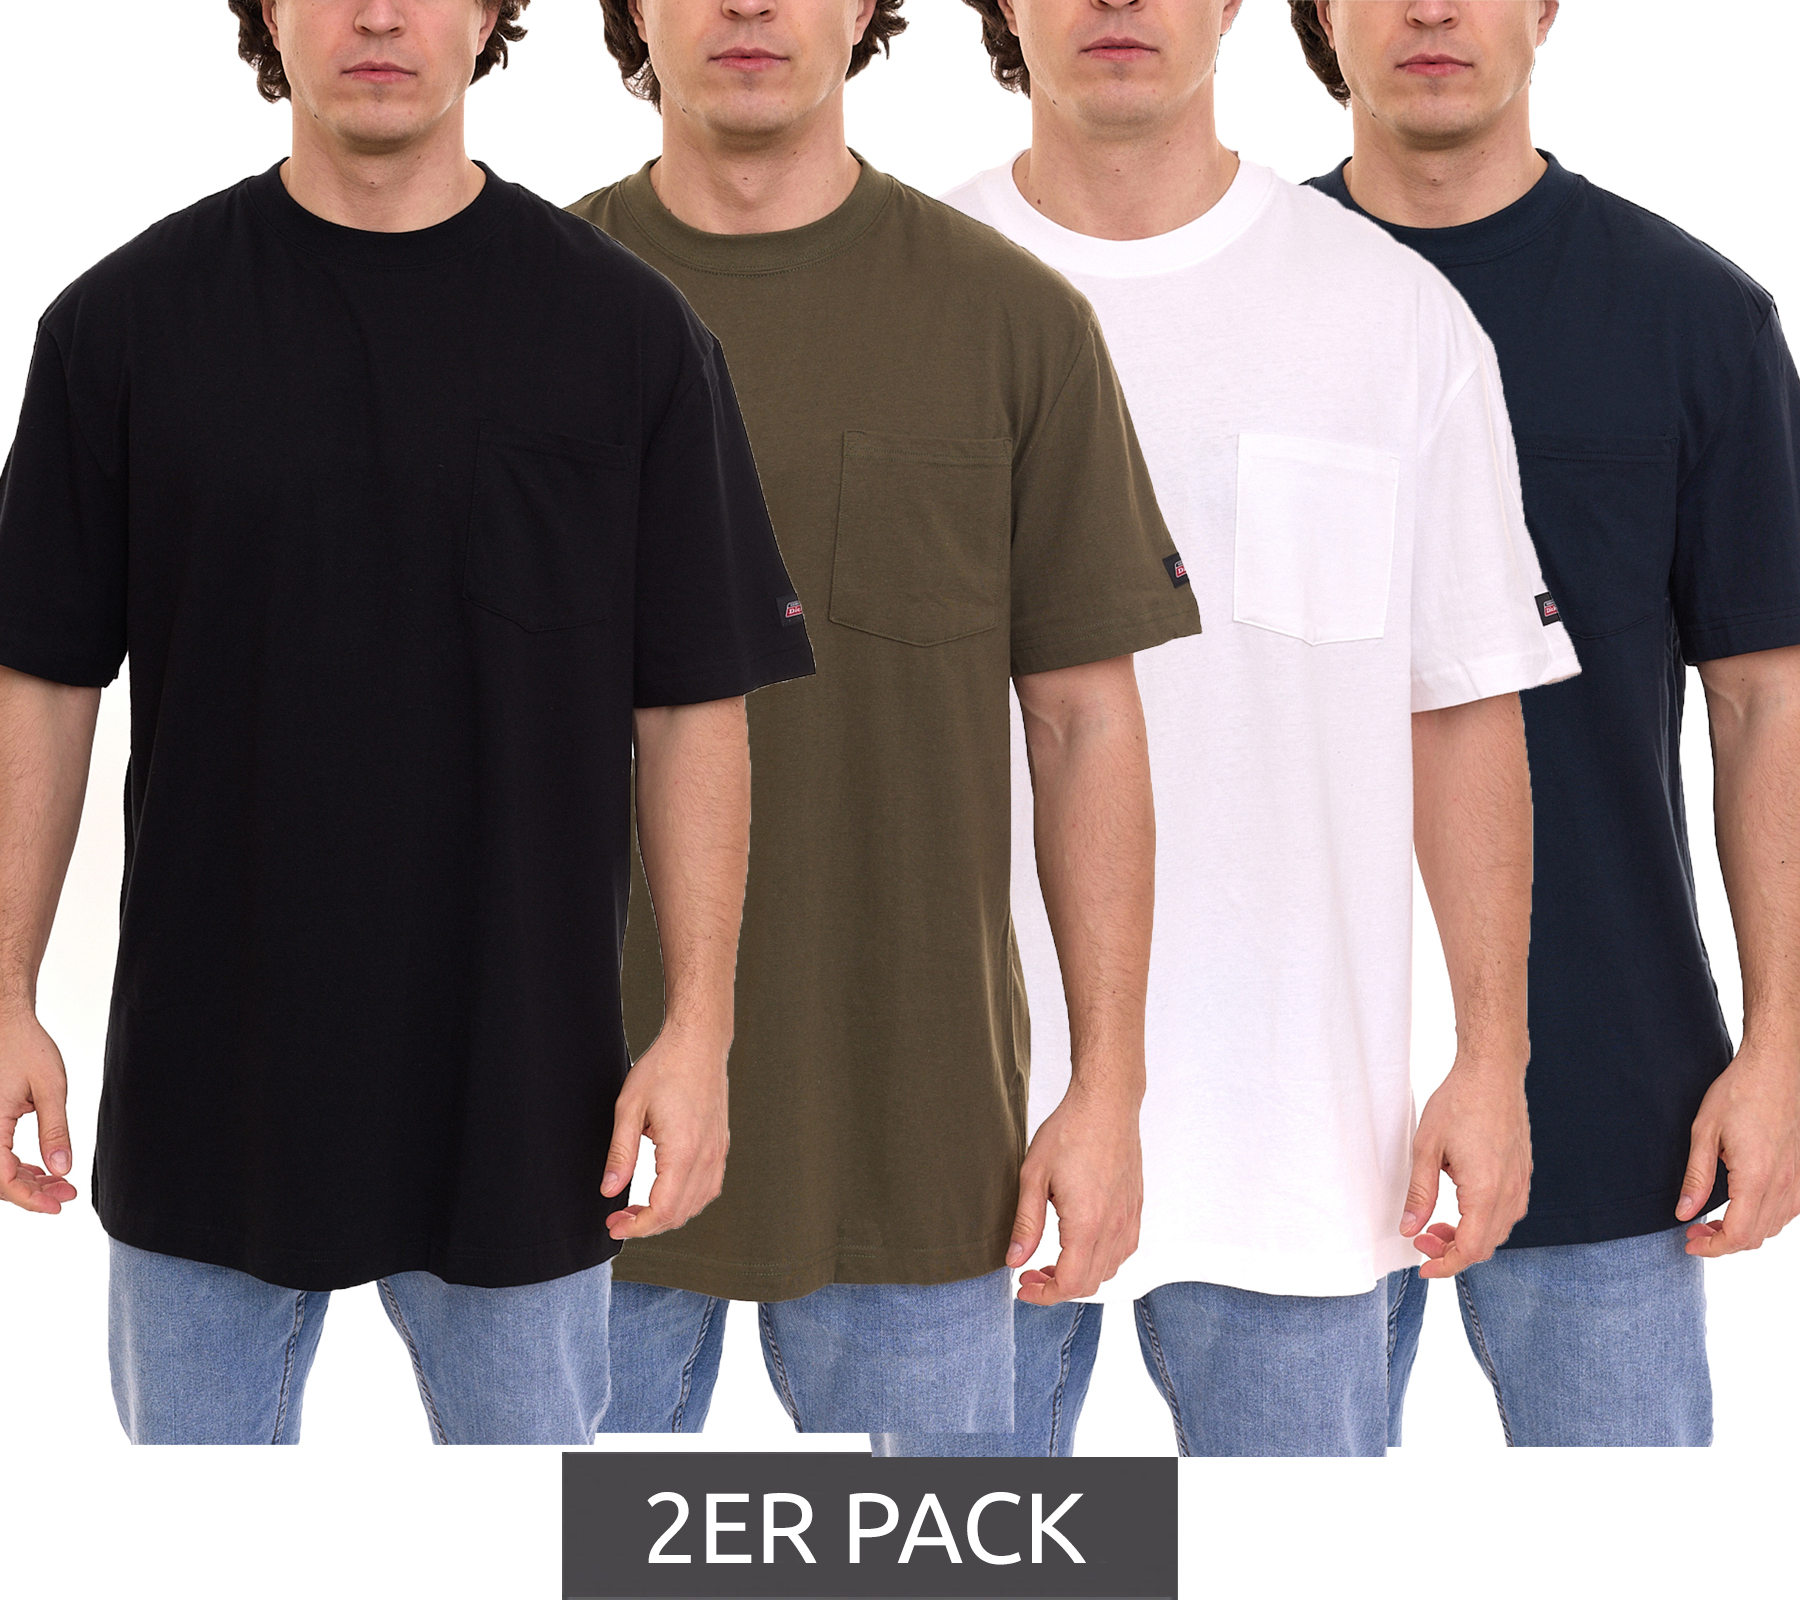 2er Pack Dickies Basic Herren T-Shirt Baumwoll-Shirt Arbeits-Shirt Cool&Dry Grammatur 250 g/m² PKGS407 in Schwarz, Weiß, Grün, Blau von Dickies